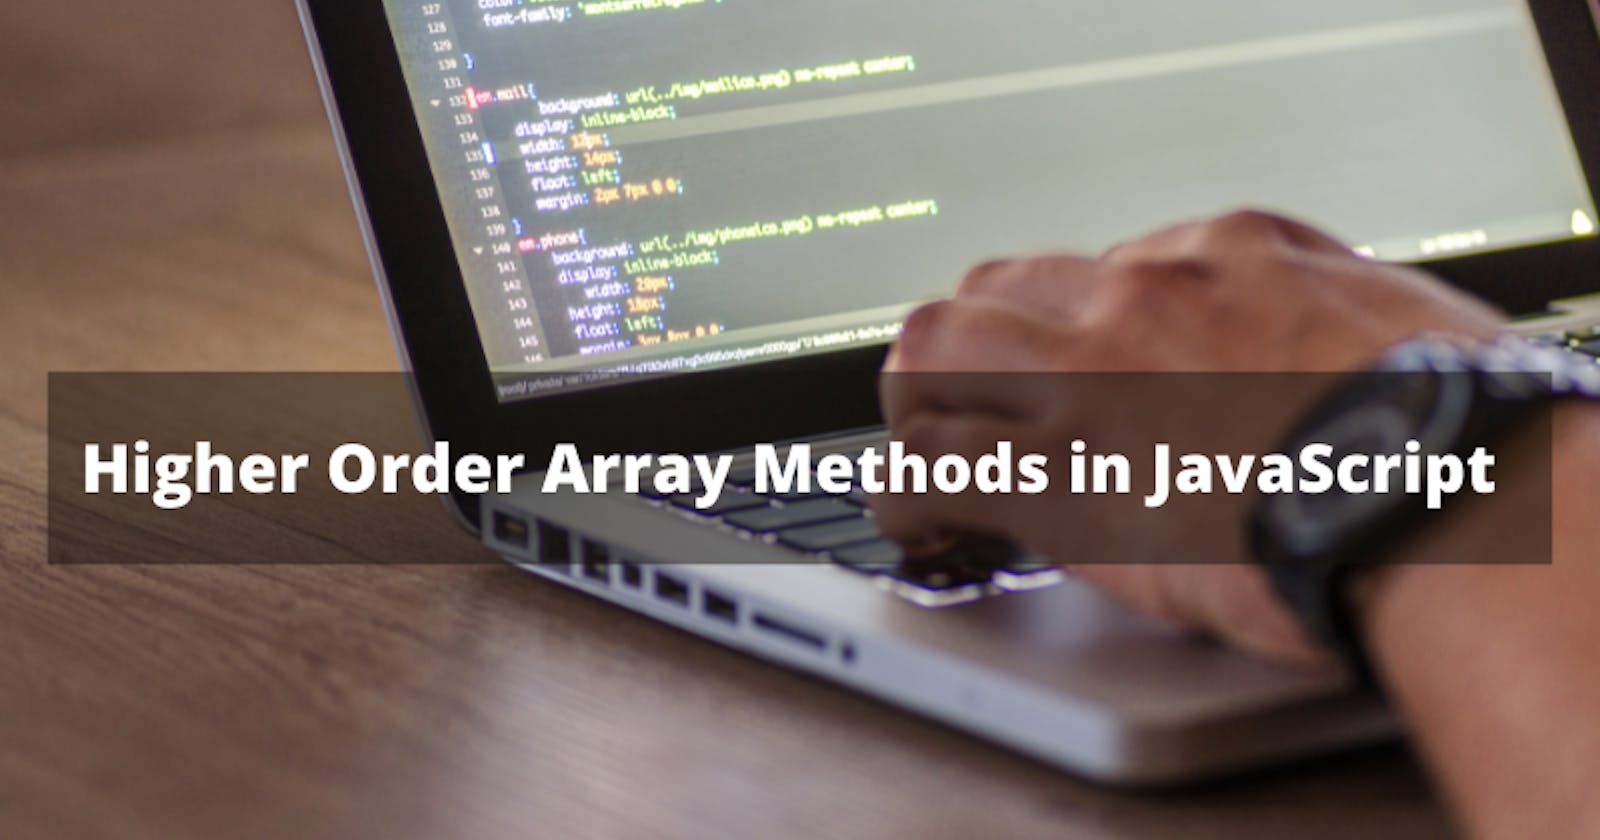 Higher order array methods in JavaScript